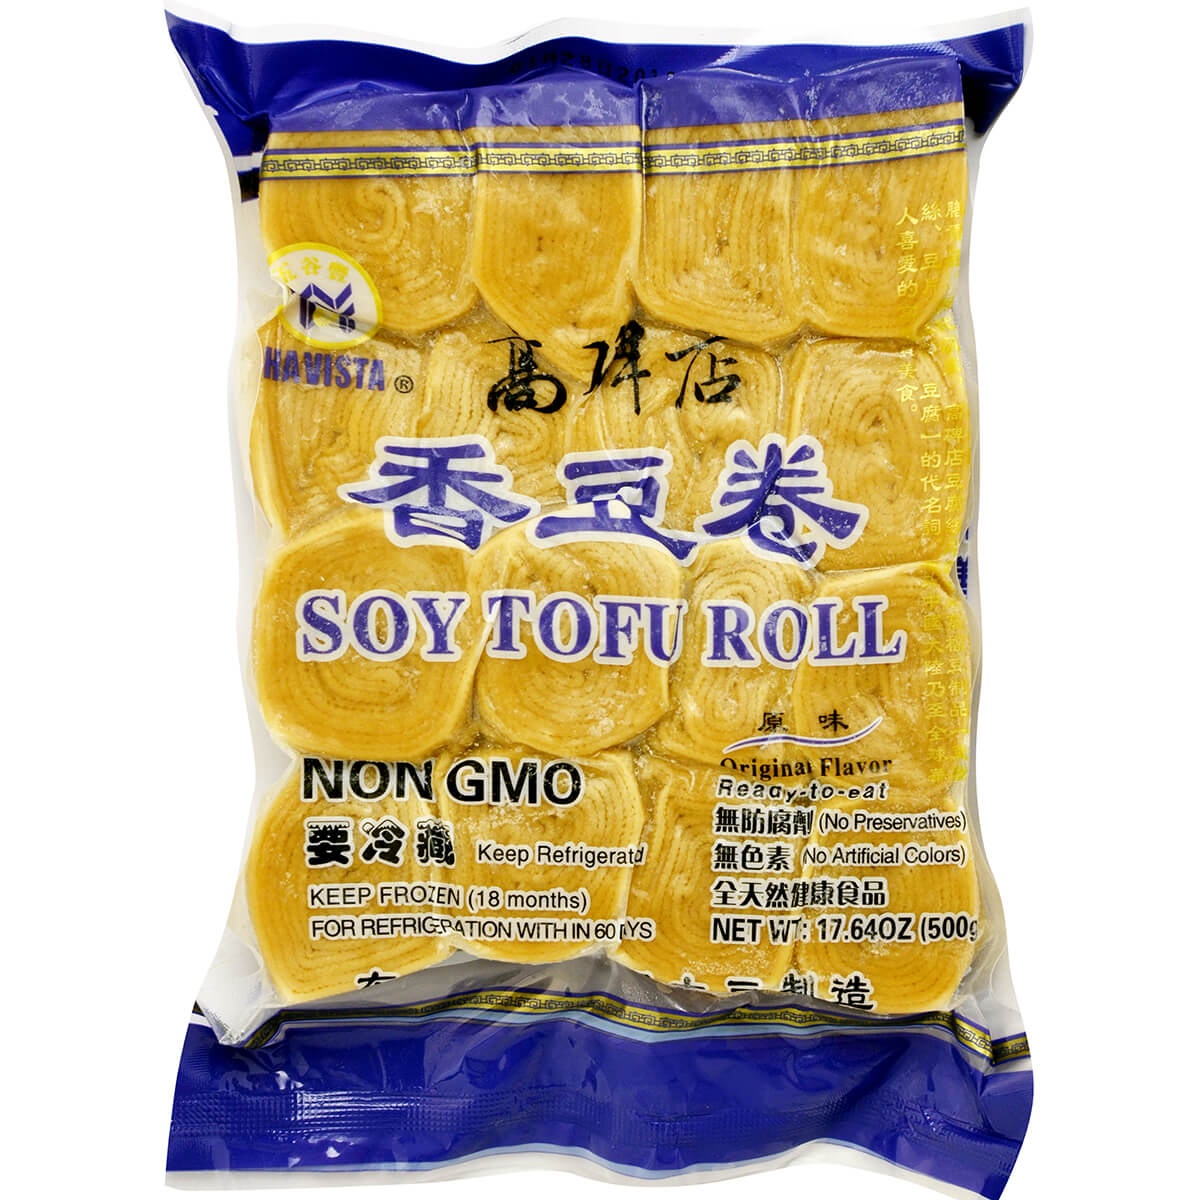 slide 1 of 1, Havista Soy Tofu Roll Org, 1 ct